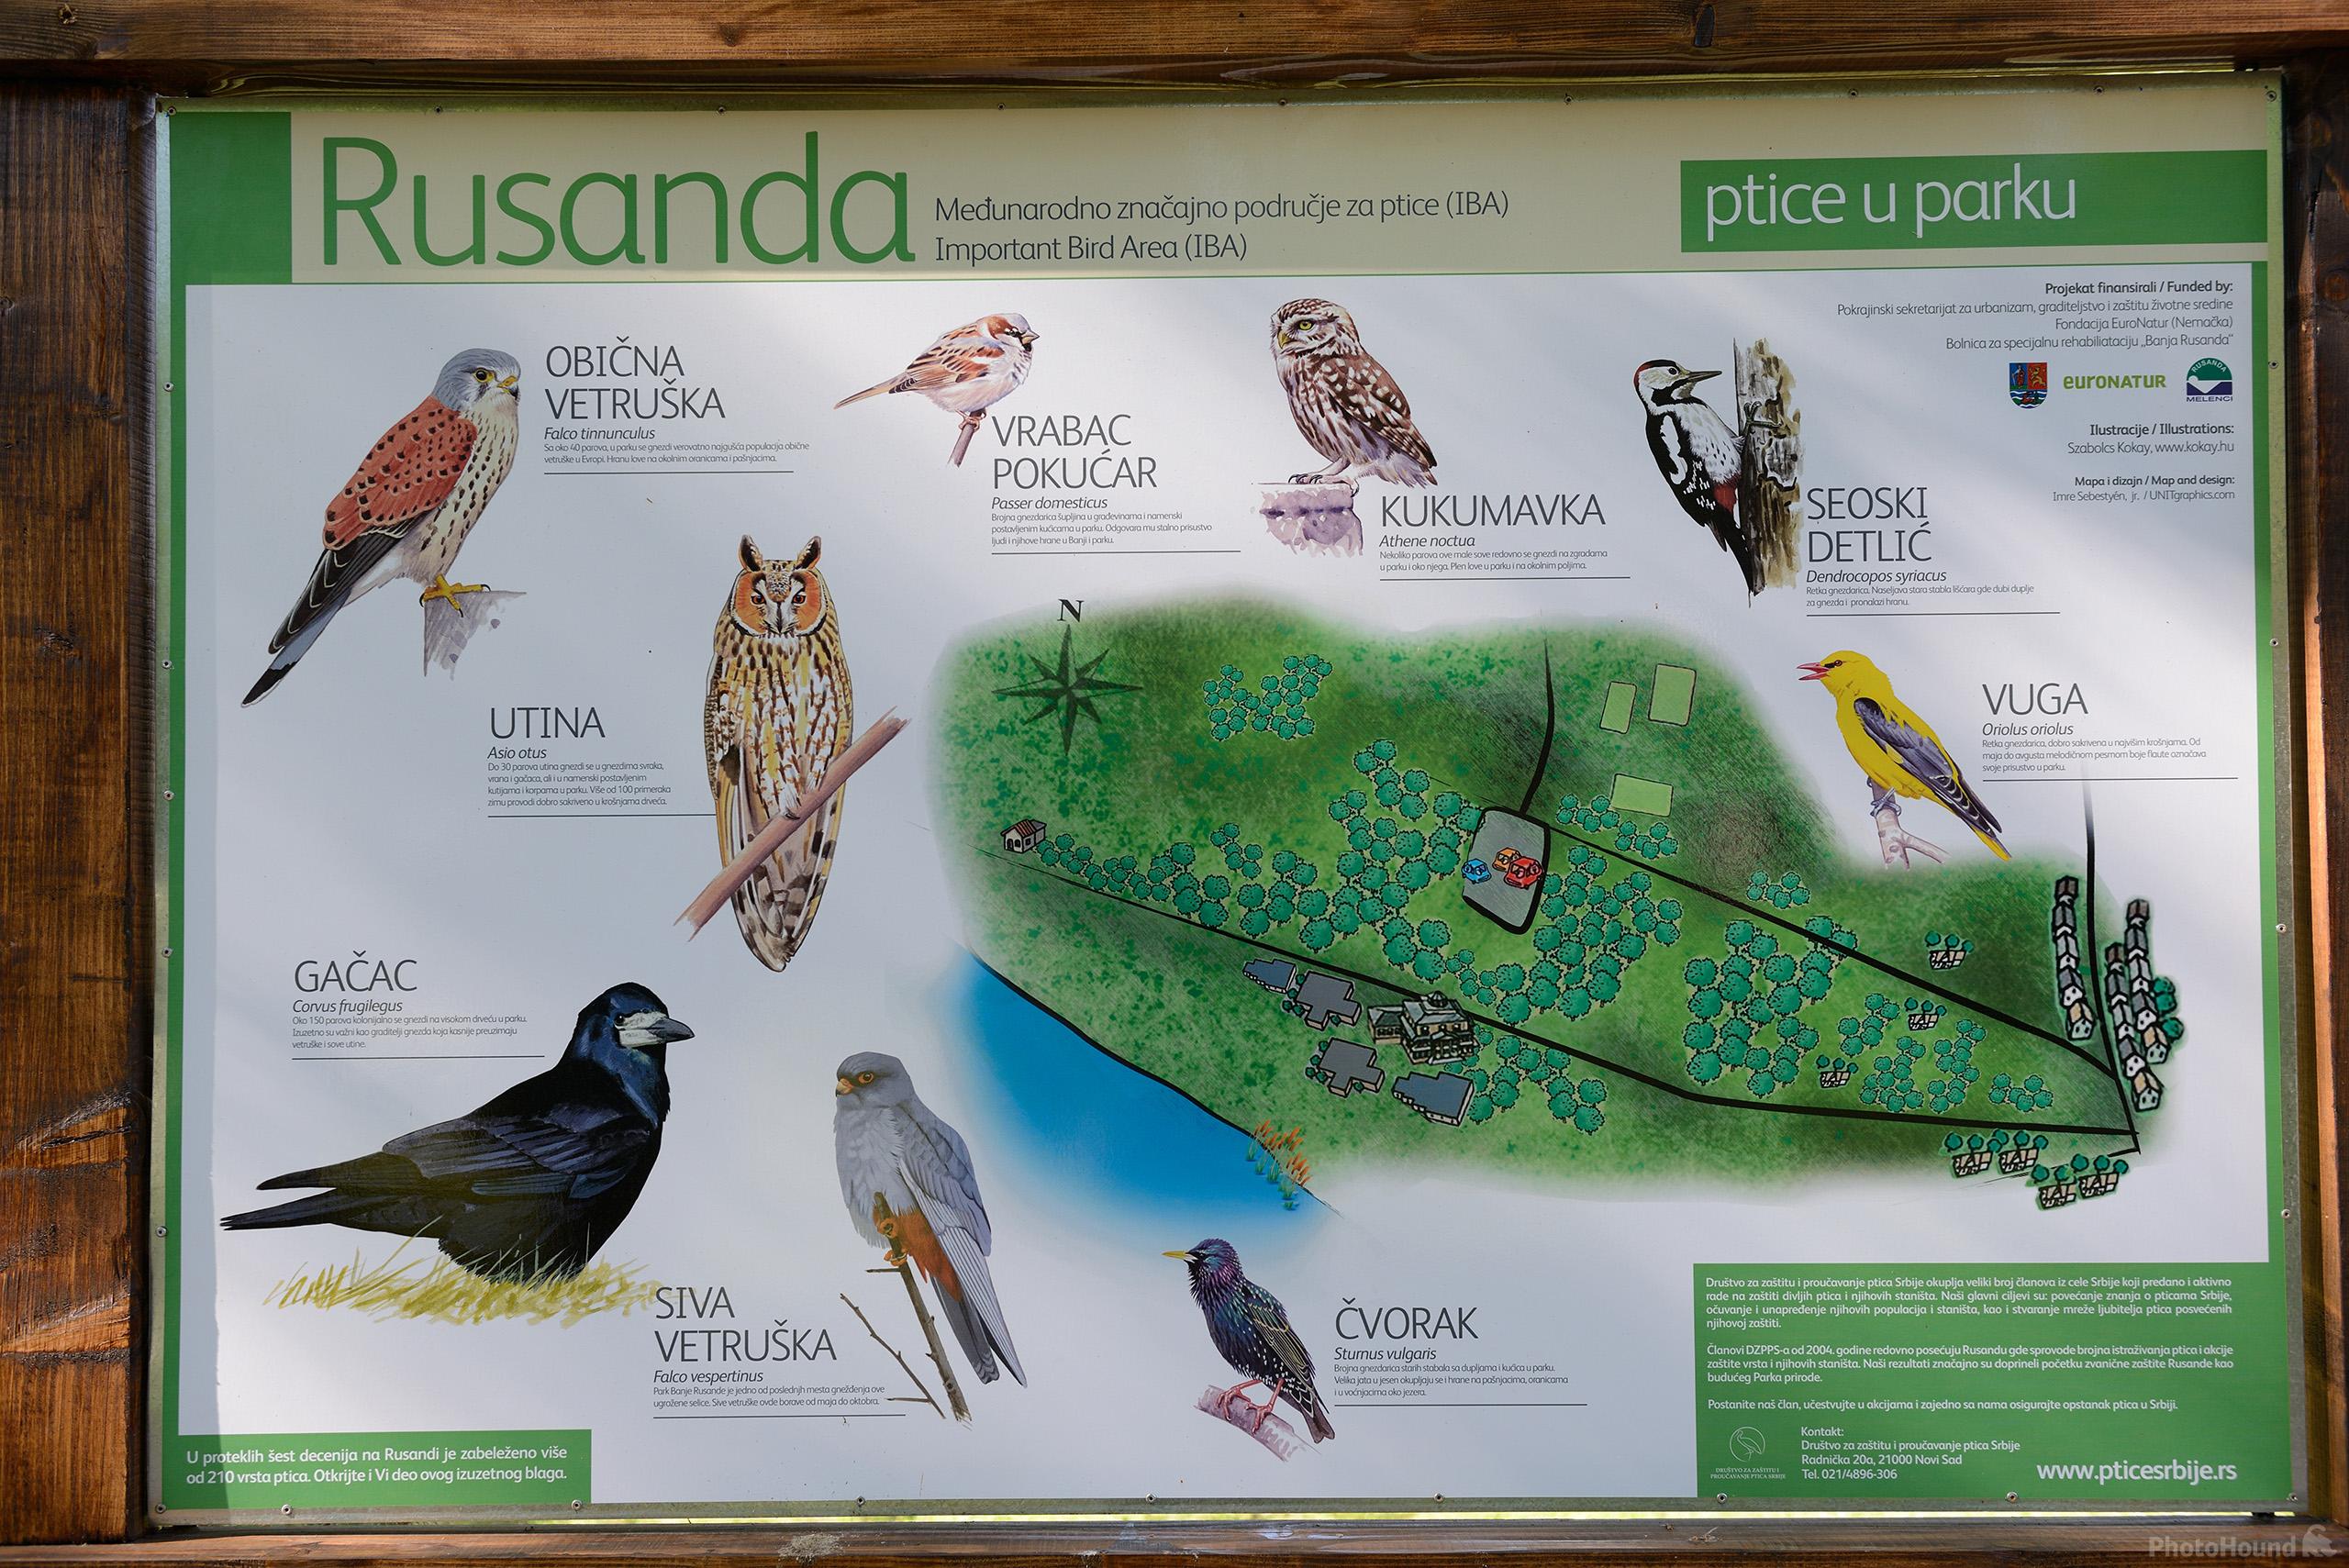 Image of Rusanda Nature Park I by Luka Esenko